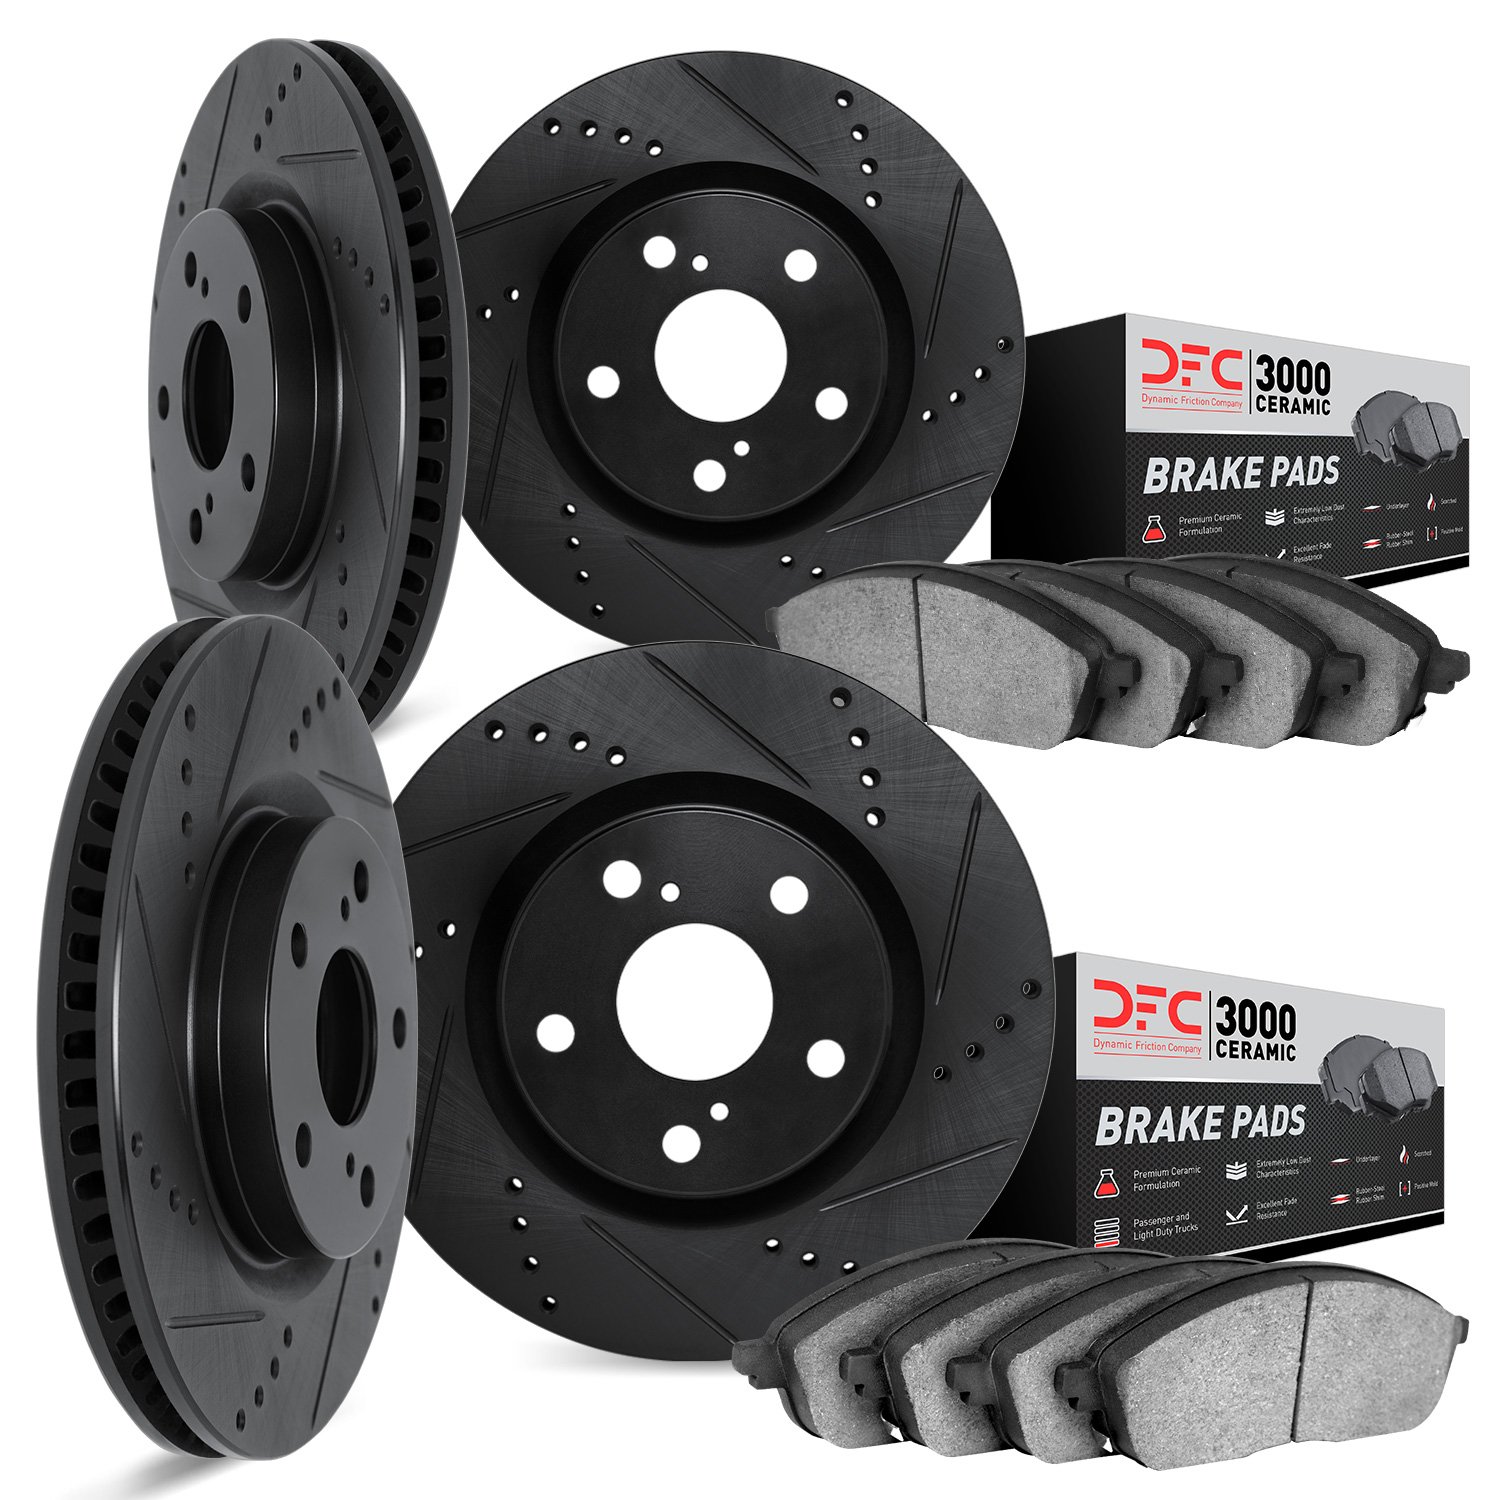 8304-67079 Drilled/Slotted Brake Rotors with 3000-Series Ceramic Brake Pads Kit [Black], Fits Select Multiple Makes/Models, Posi